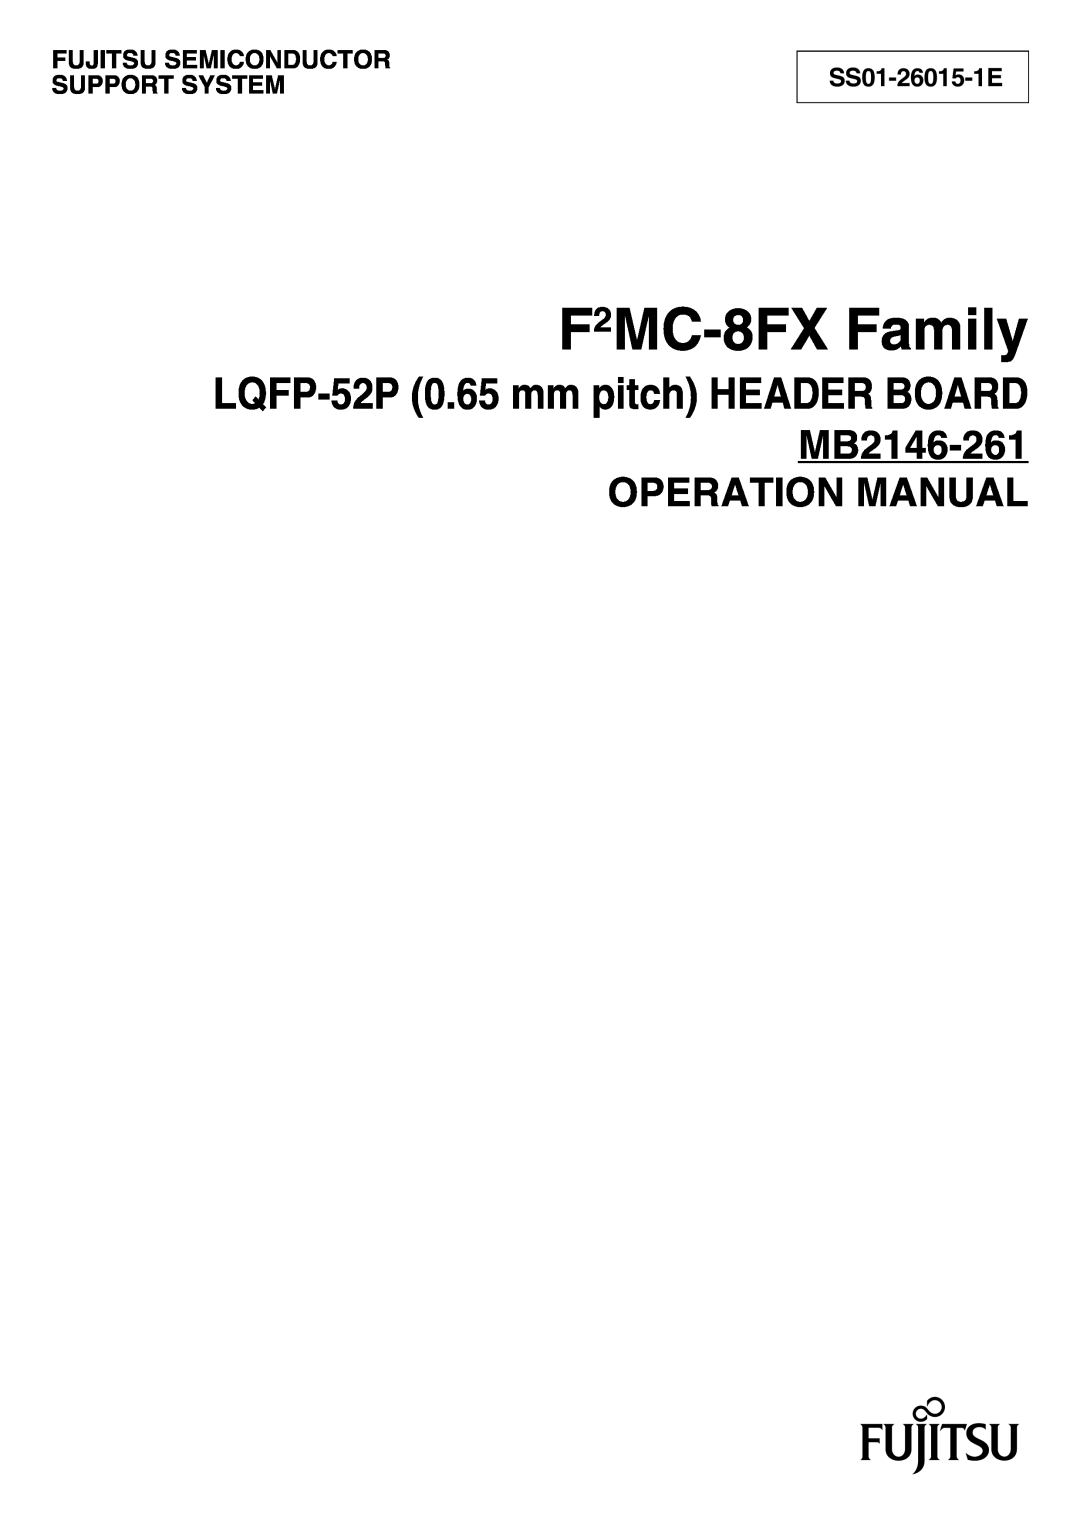 Fujitsu operation manual SS01-26015-1E, F2MC-8FX Family, LQFP-52P 0.65 mm pitch HEADER BOARD 